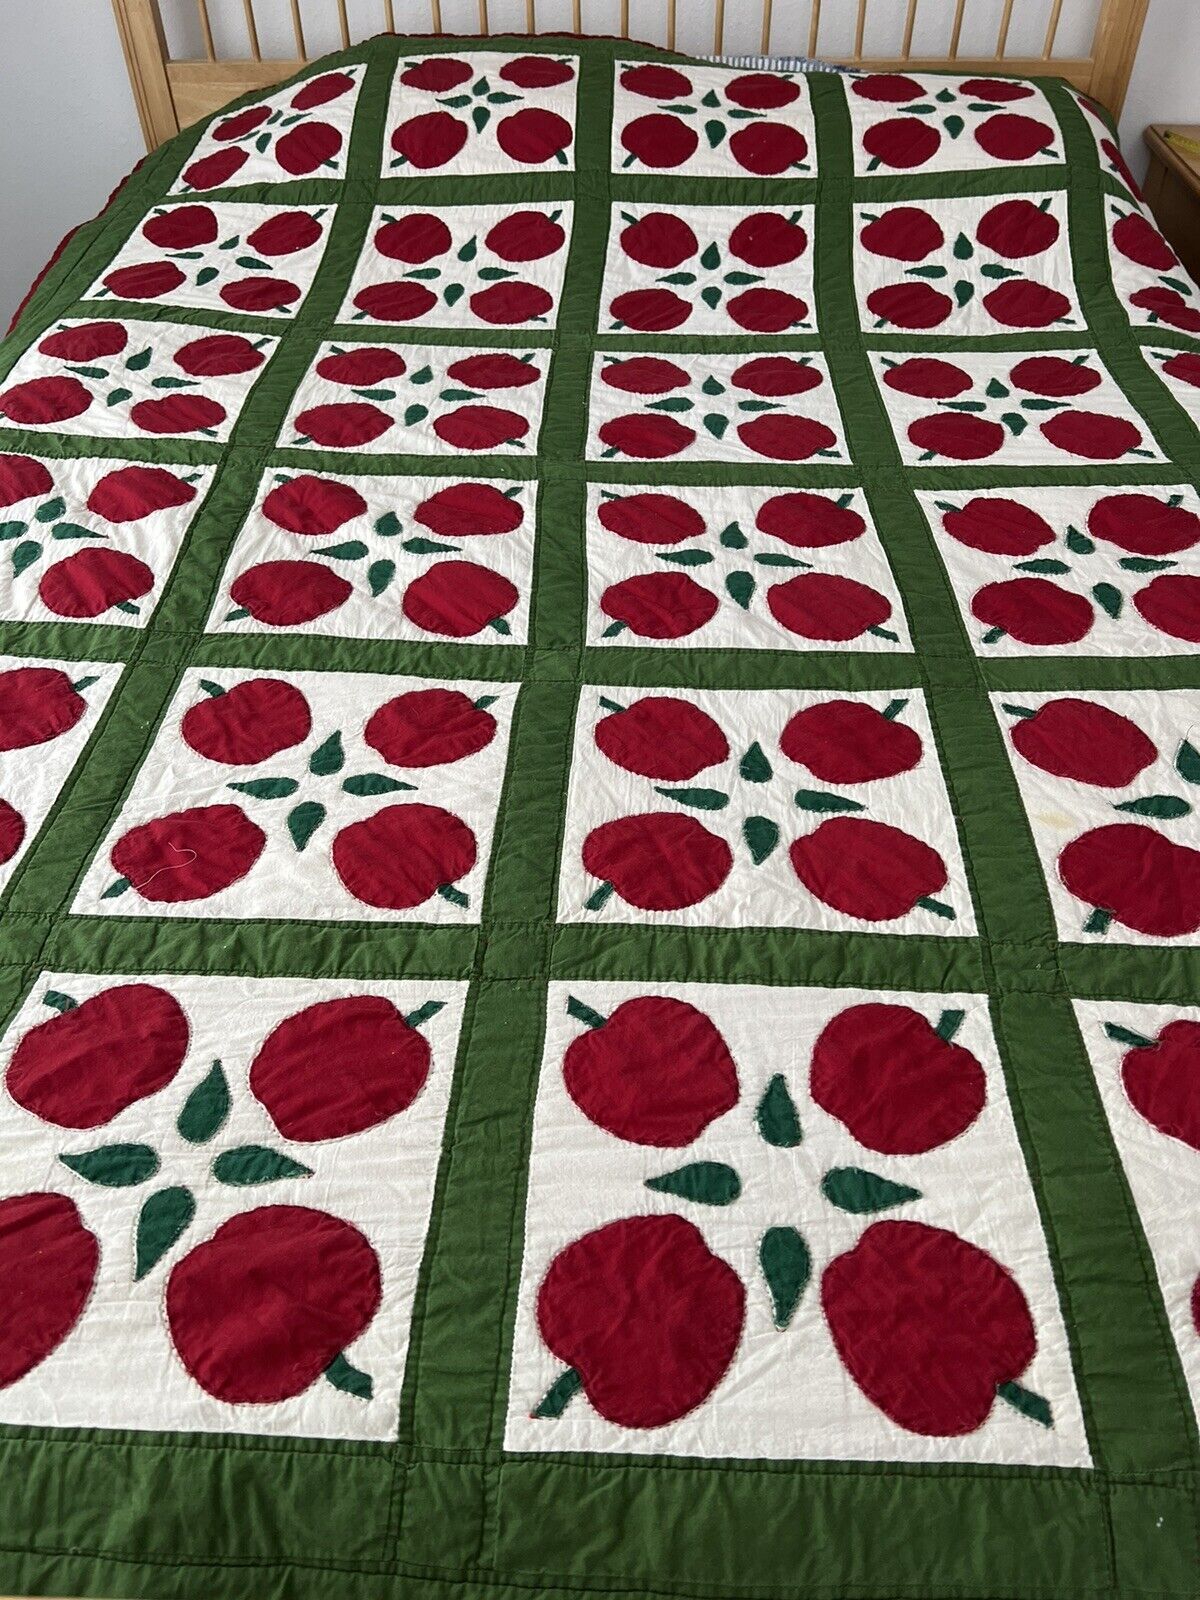 Vintage Appliquéd Quilt, Apple Design, Hand Quilted in Red Thread, 68 x 80”